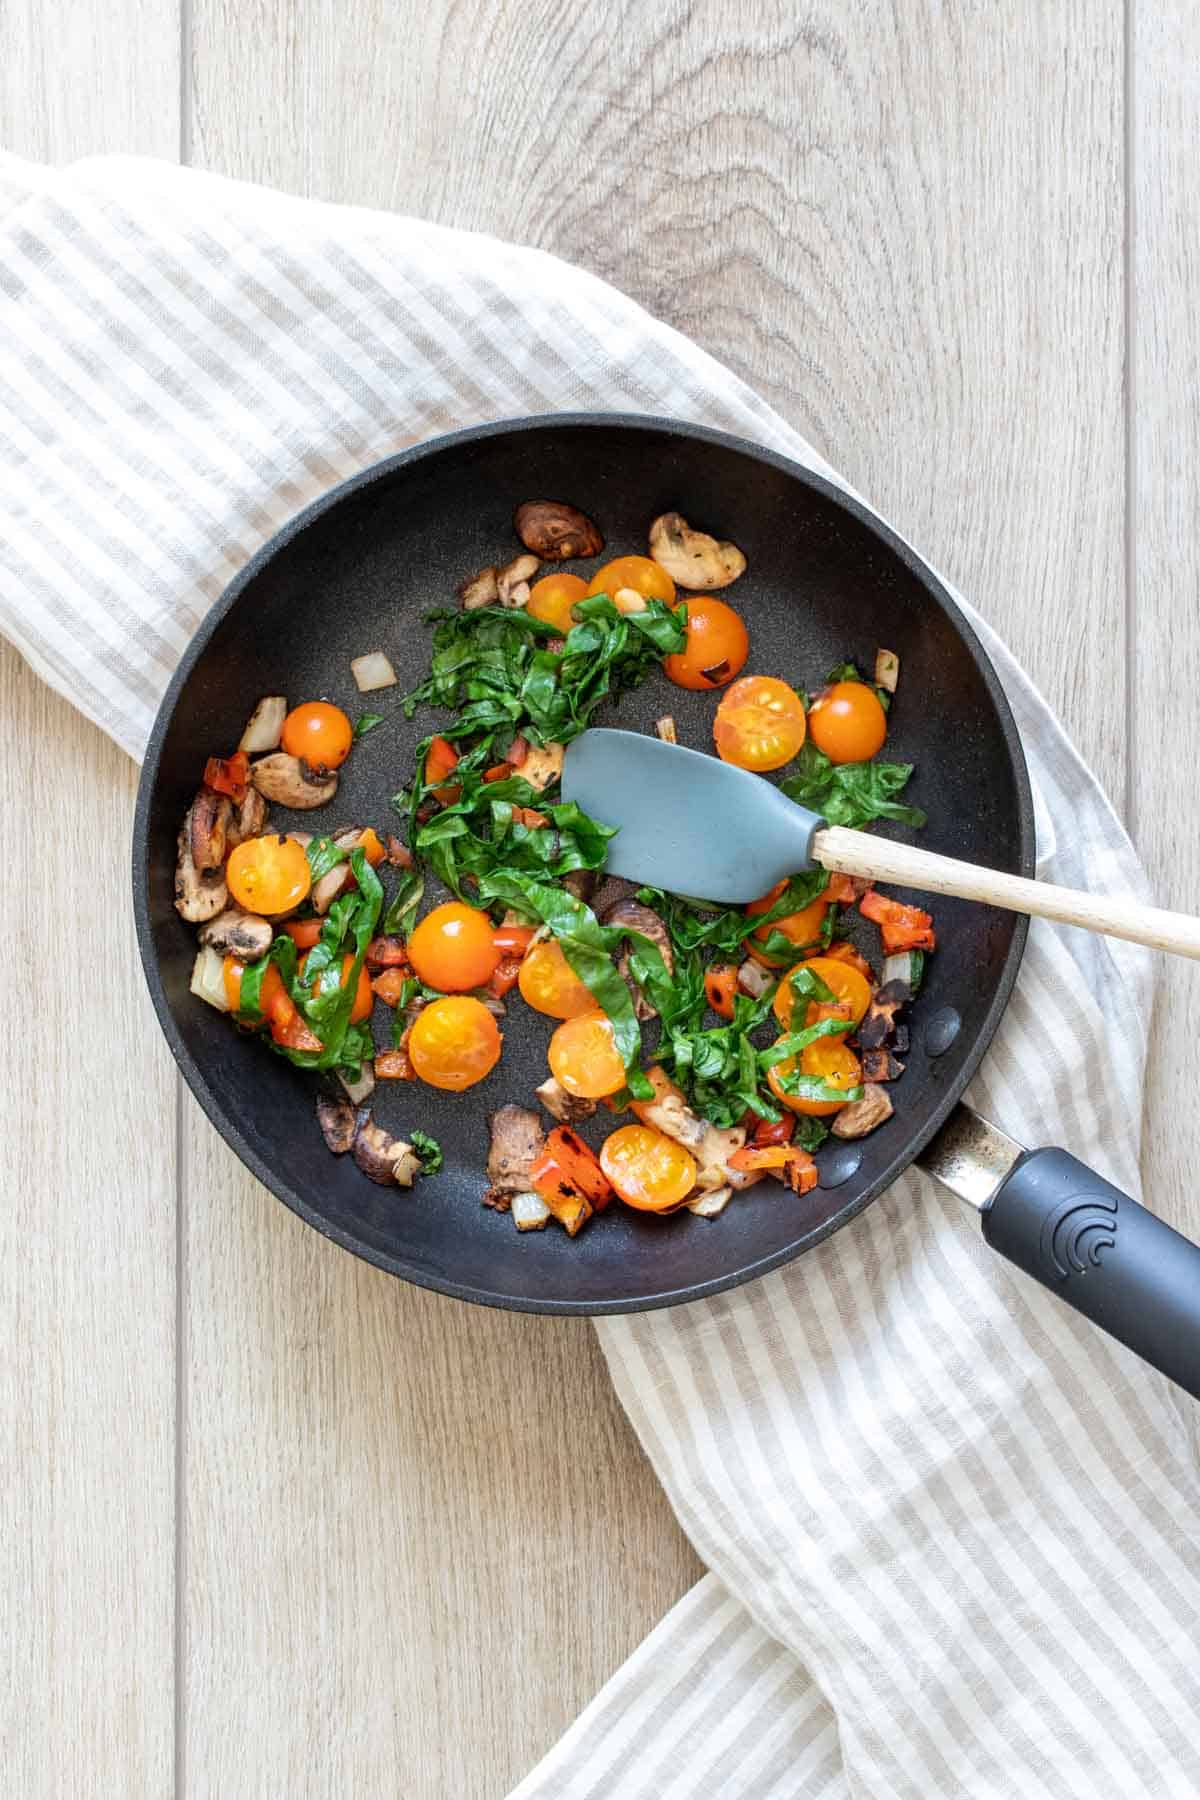 Grey spatula mixing sautéed veggies in a black pan